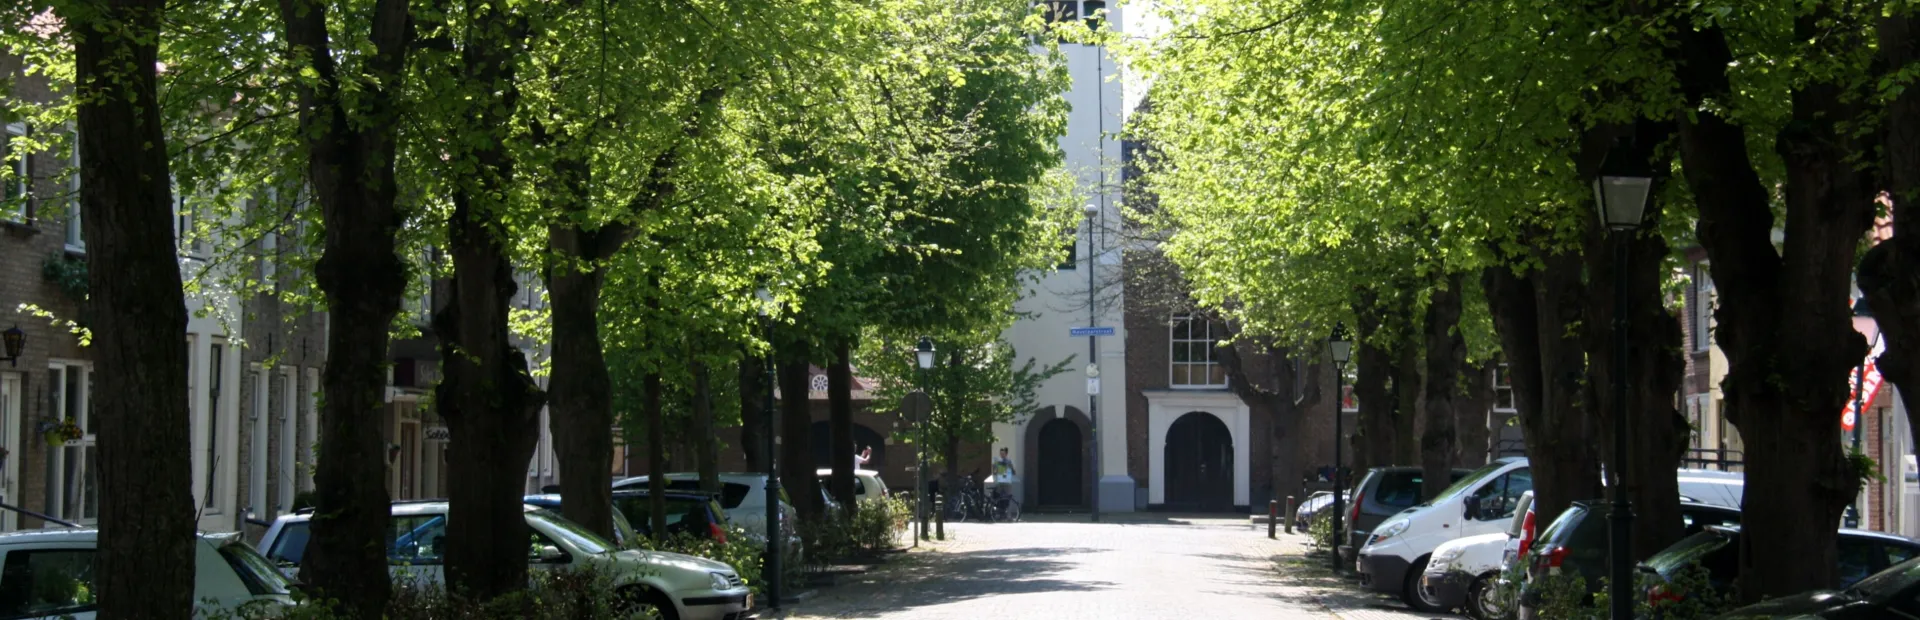 Voorstraat en kerk Colijnsplaat By Vivian Kramer